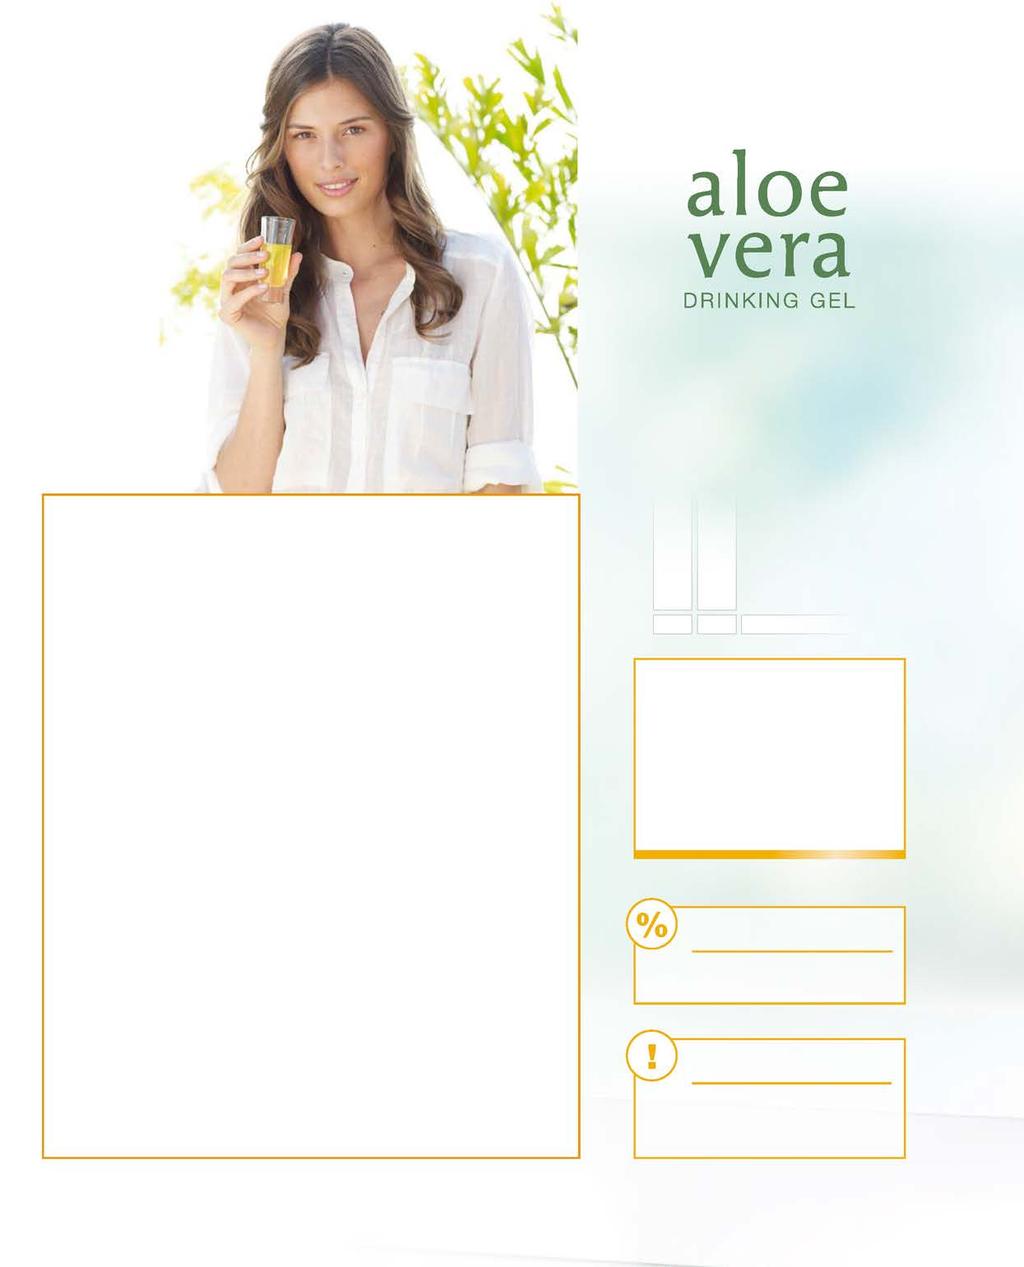 32 Aloe Vera Gel Μέλι Παράδοση στην Υγεία Δεν υπάρχει κανένα άλλο φυσικό προϊόν παγκοσμίως που να είναι τόσο επιτυχημένο και να φέρει παράλληλα μια παράδοση χιλιετιών όπως η Aloe Vera.